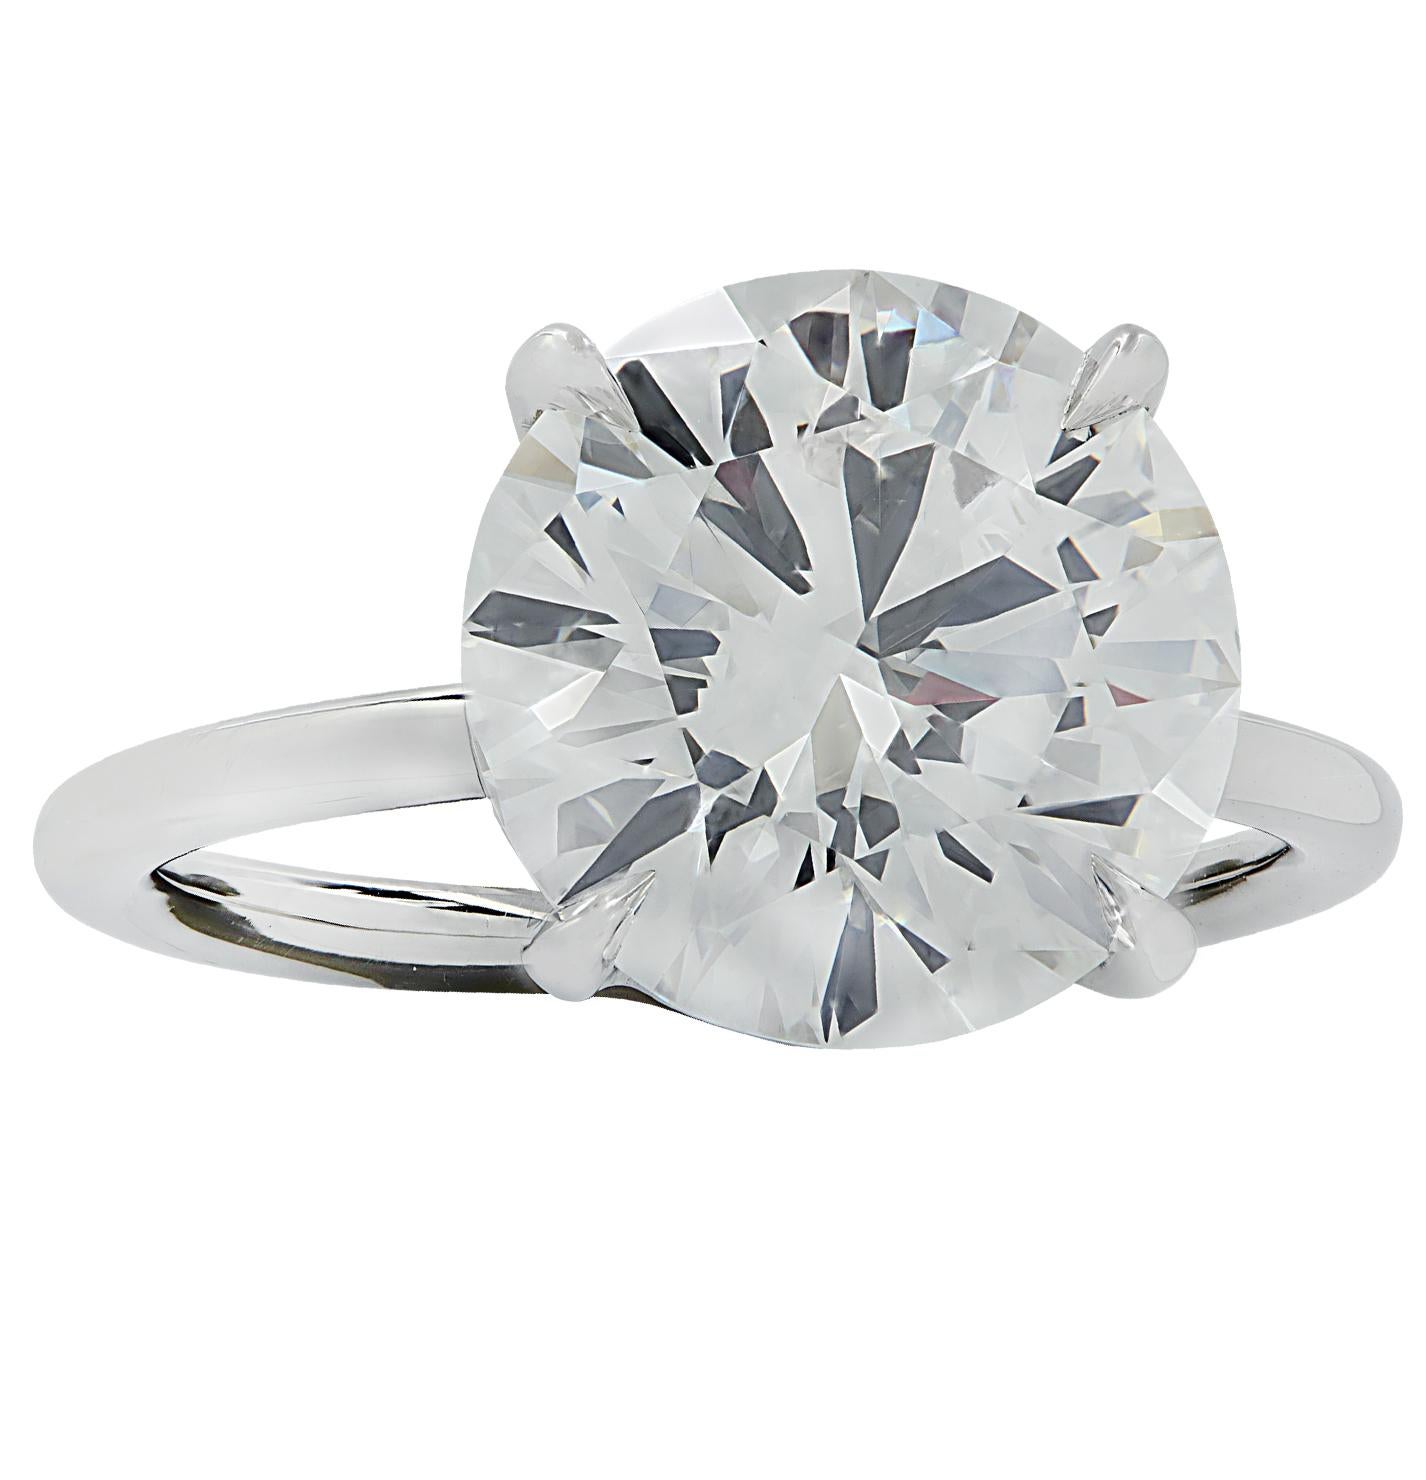 Round Cut Vivid Diamonds GIA Certified 5.07 Carat Diamond Engagement Ring For Sale